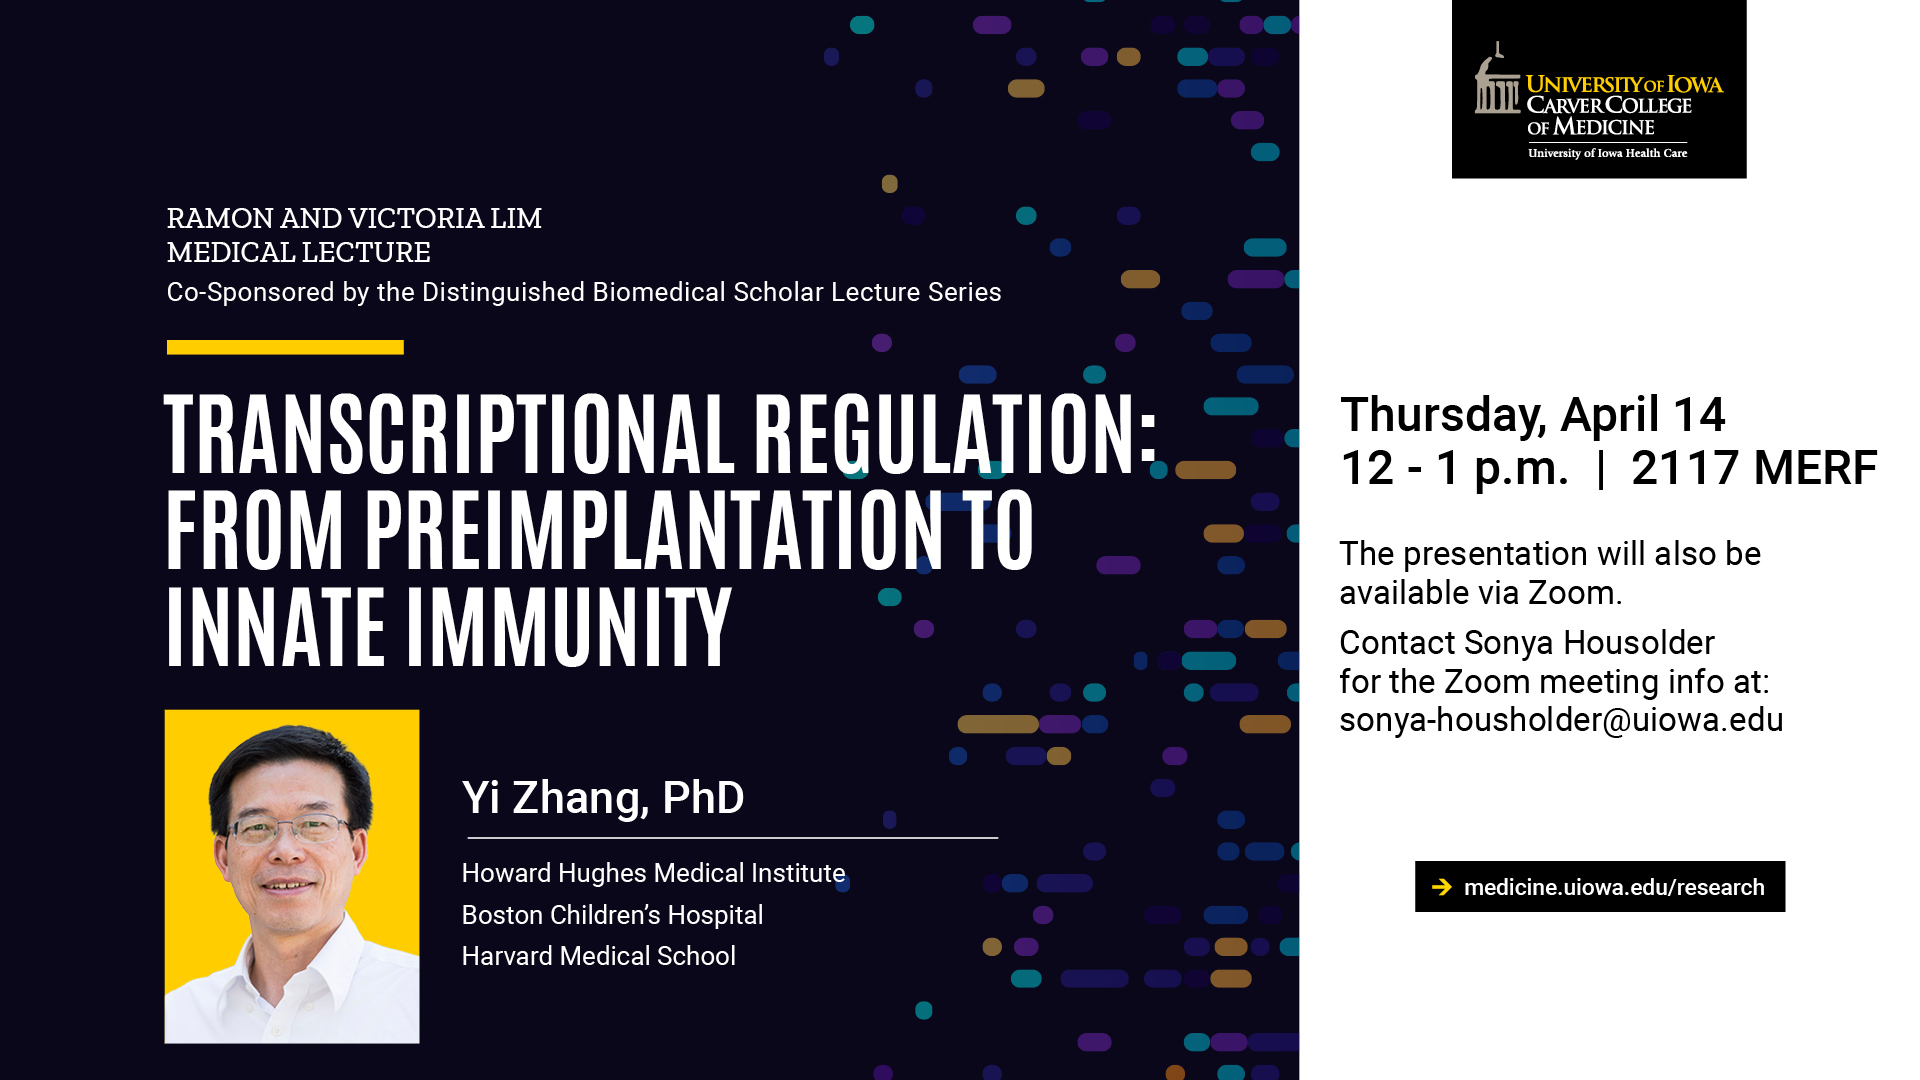 Yi Zhang, PhD Image April 14th lecture